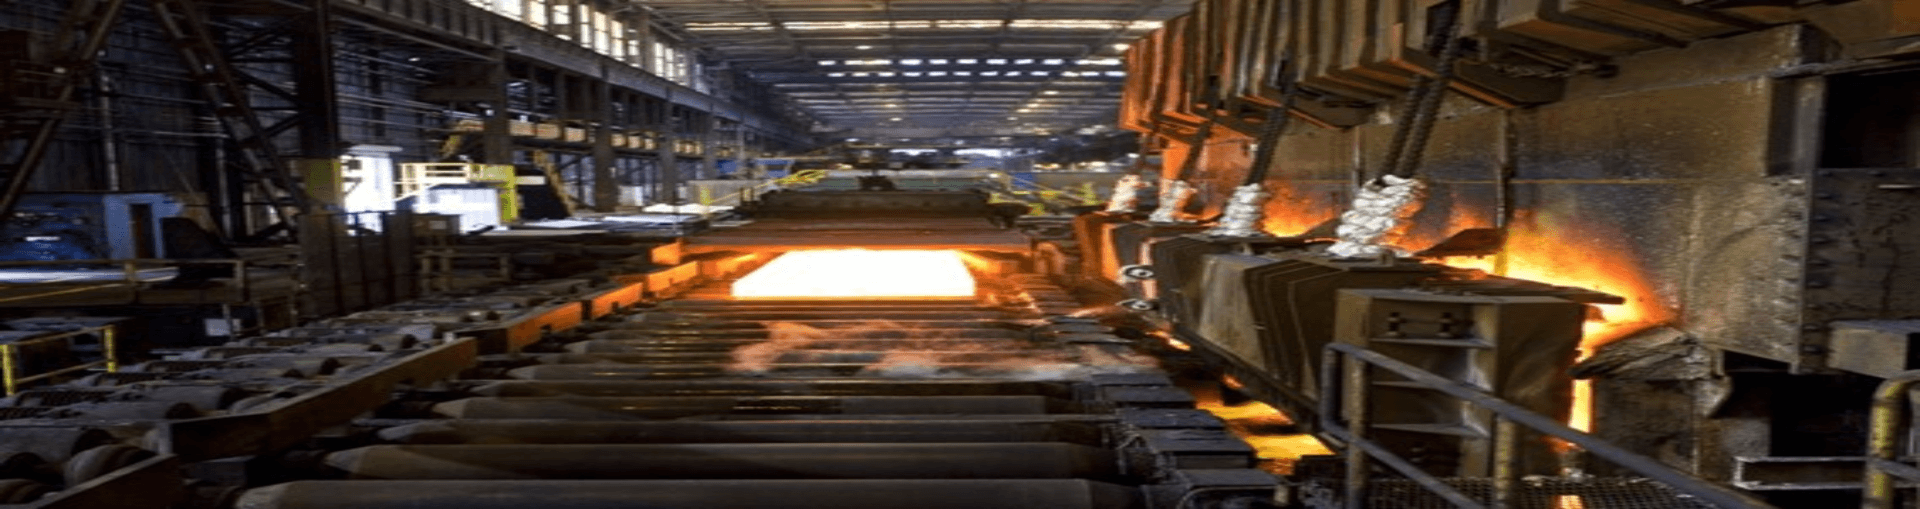 Steel plant interior with molten steel